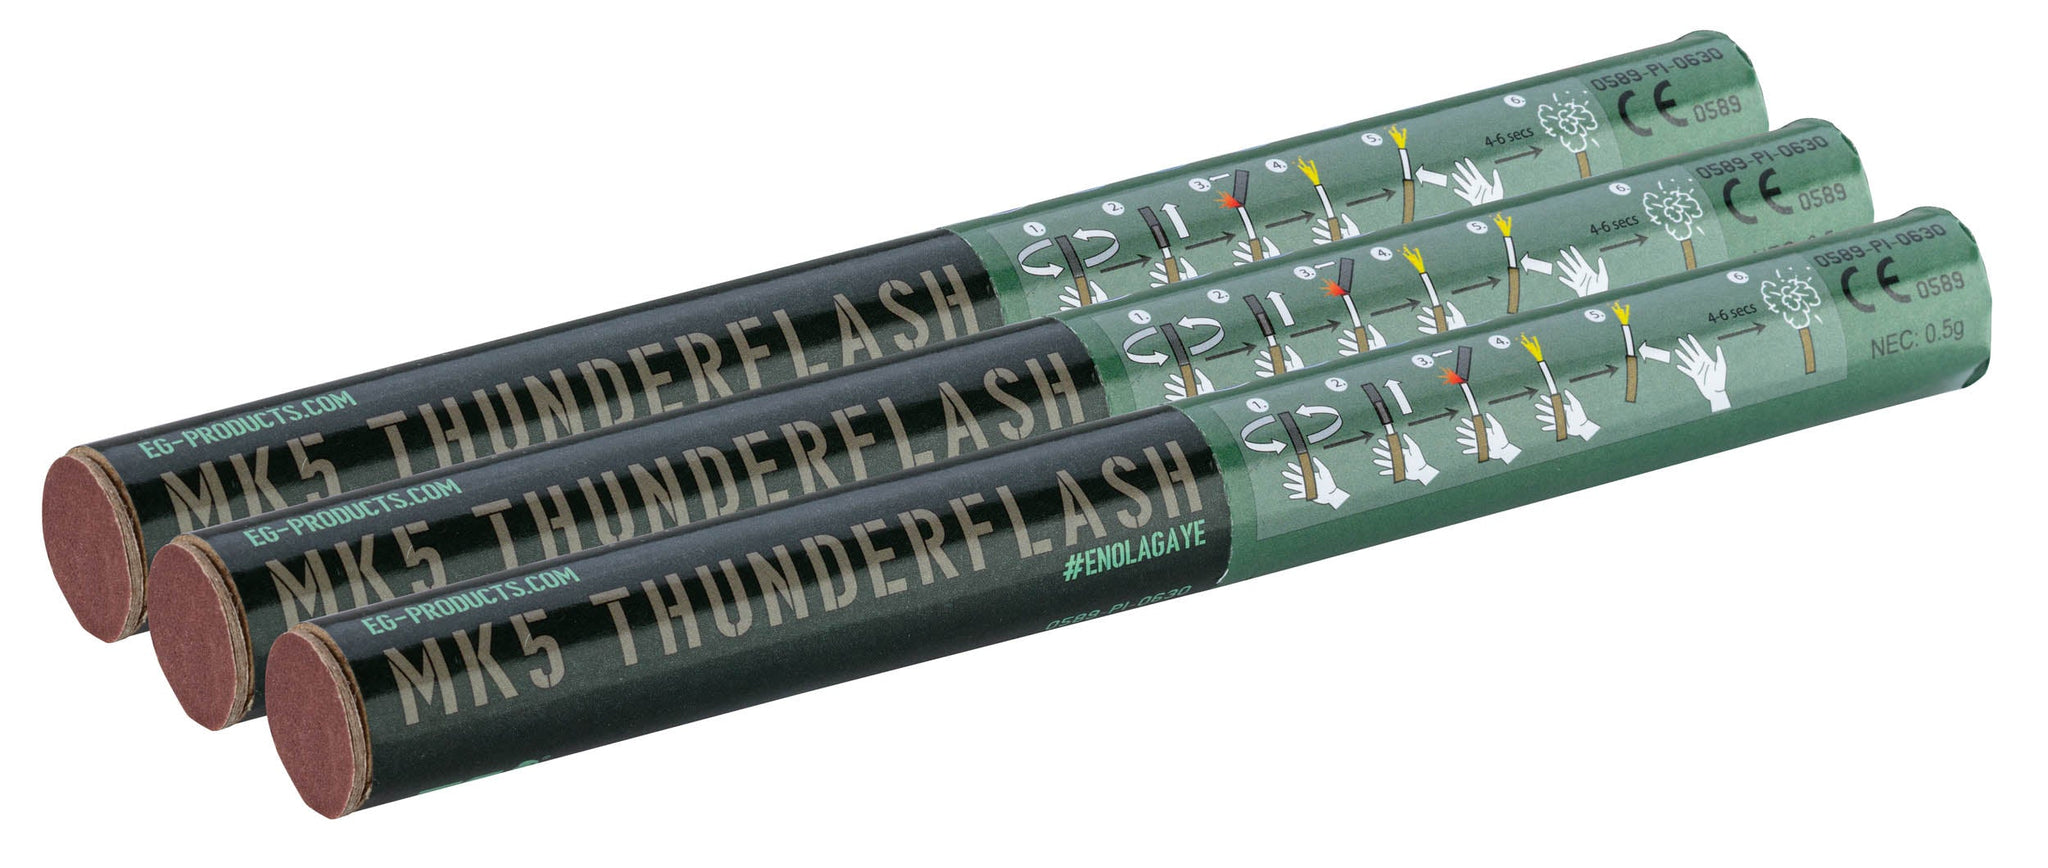 Enola Gaye MK5 Thunderflash - Pack of 60